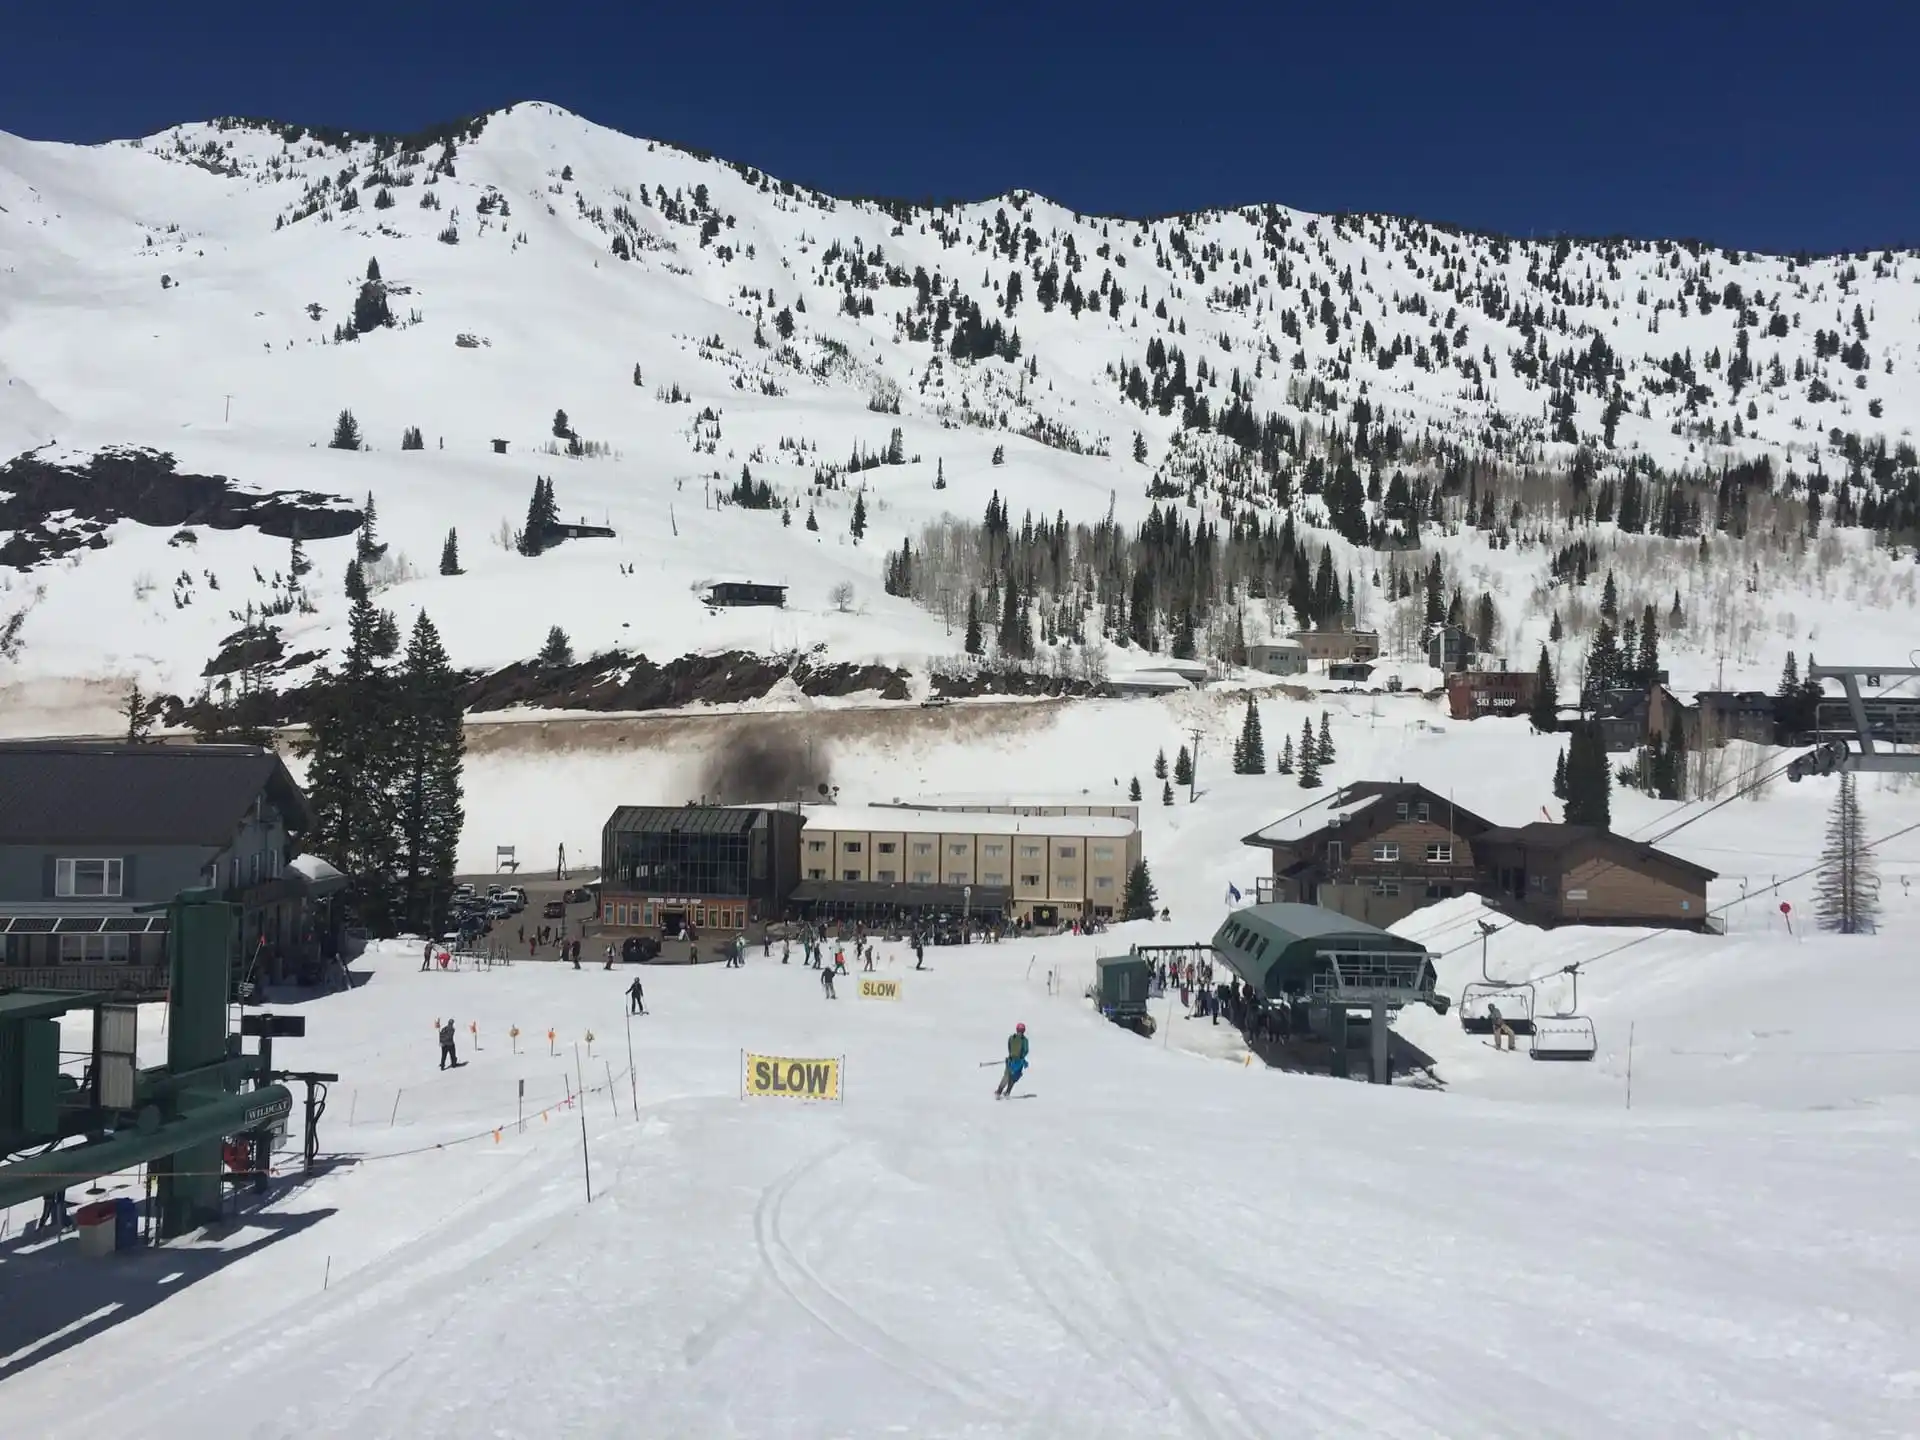 View of the main base area at Alta Ski Resort